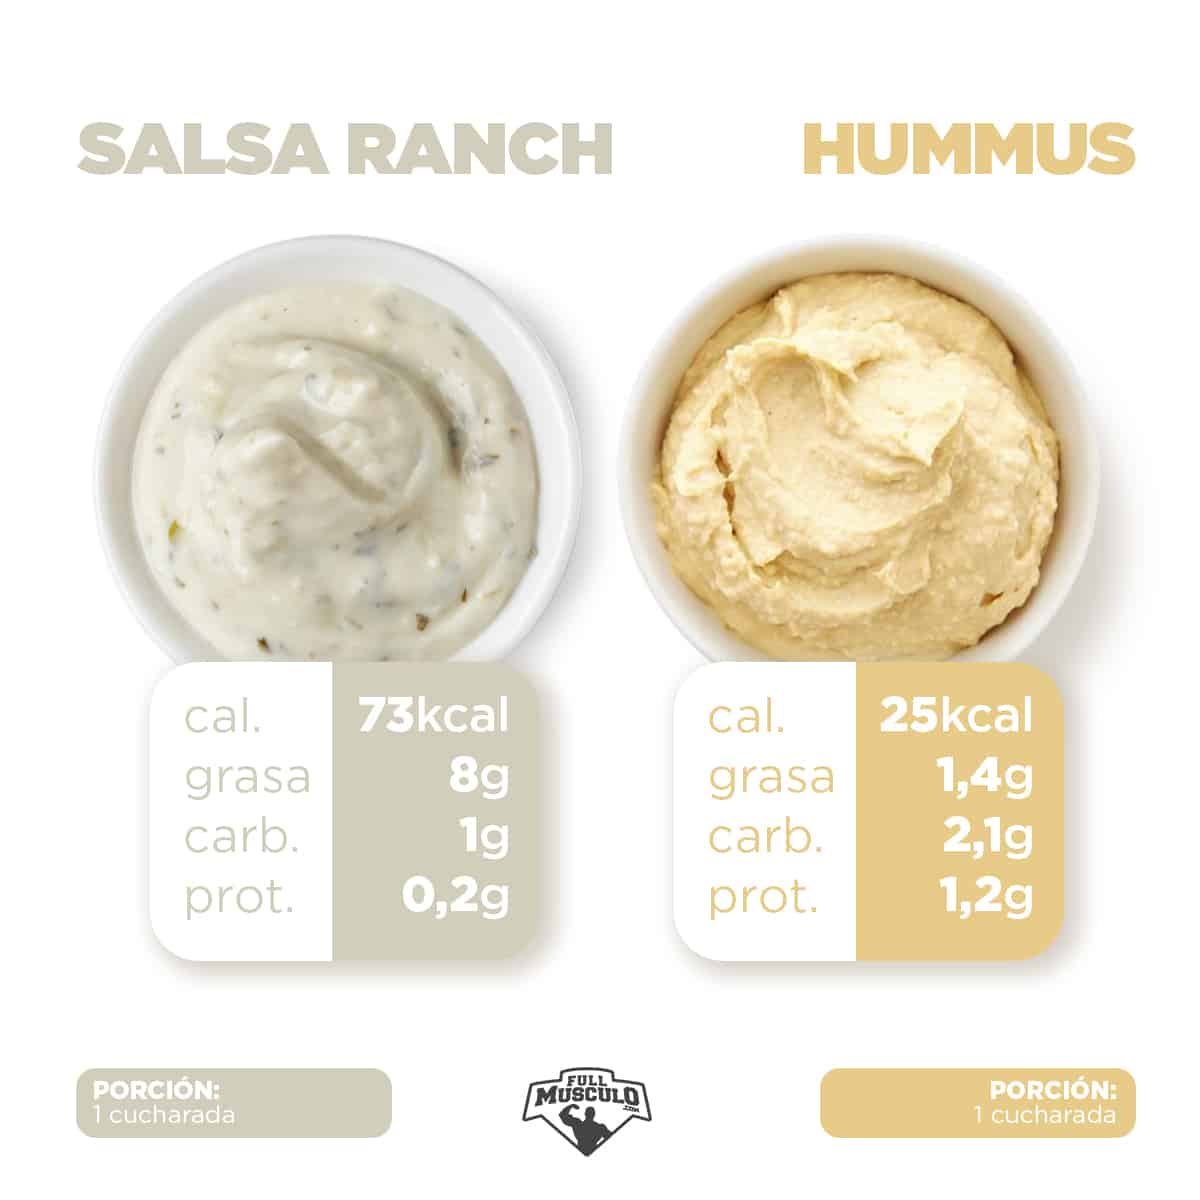 hummus vs ranch